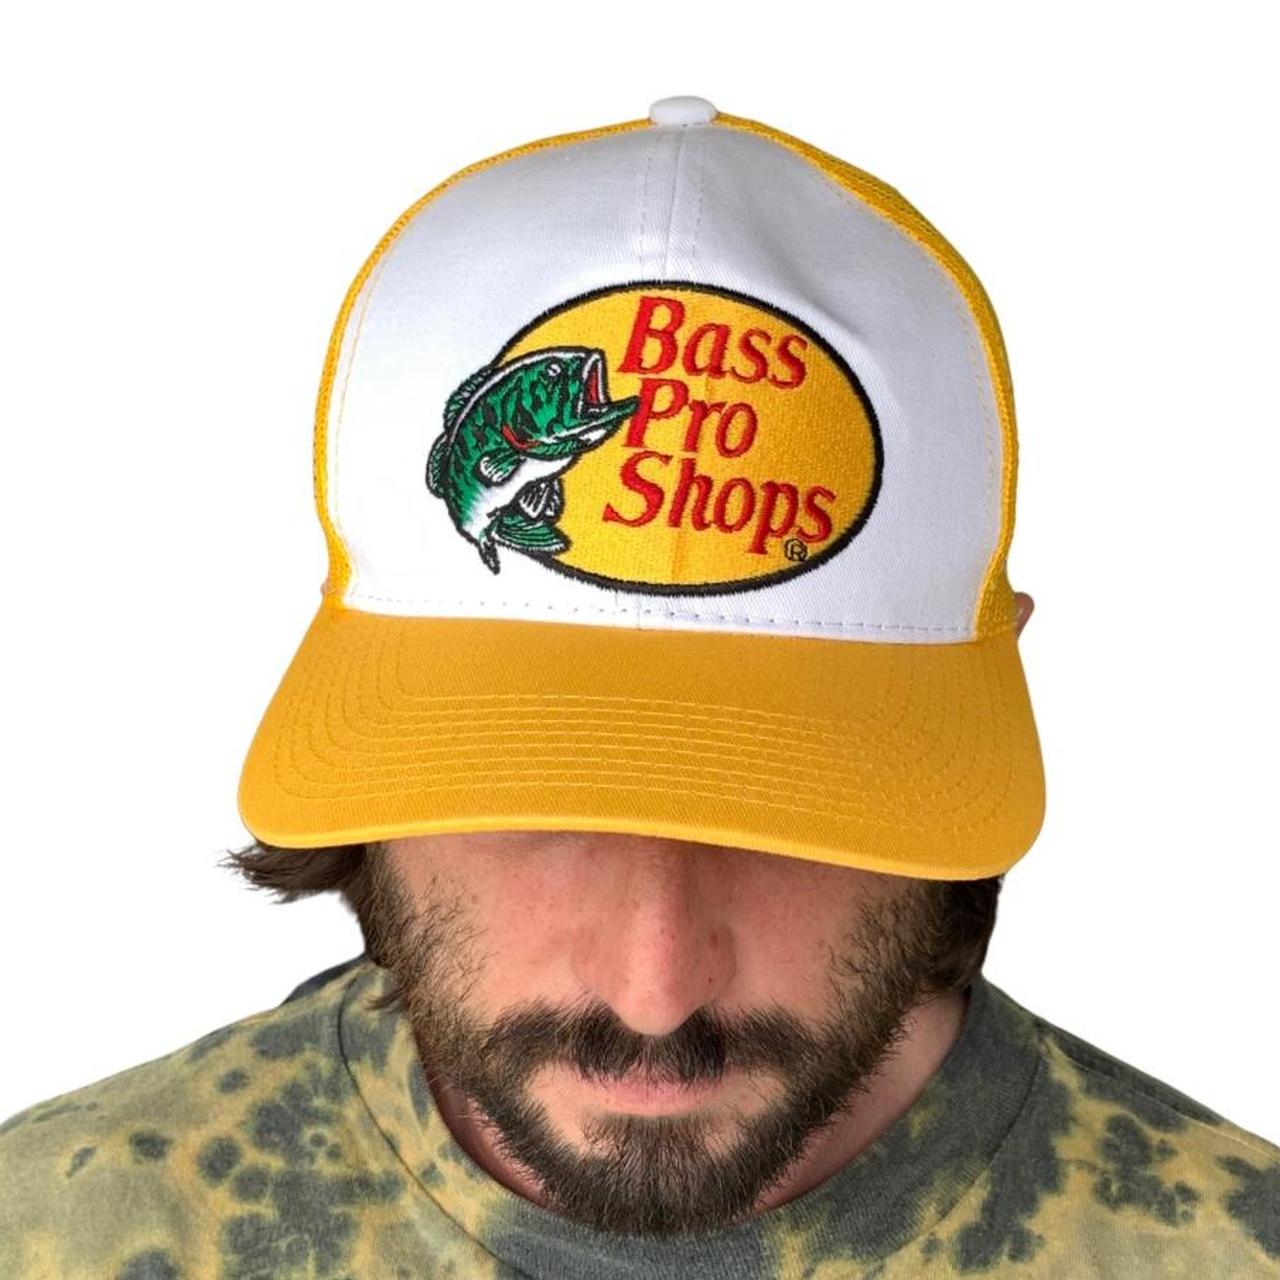 Bass Pro Shops Men's Hat - Yellow